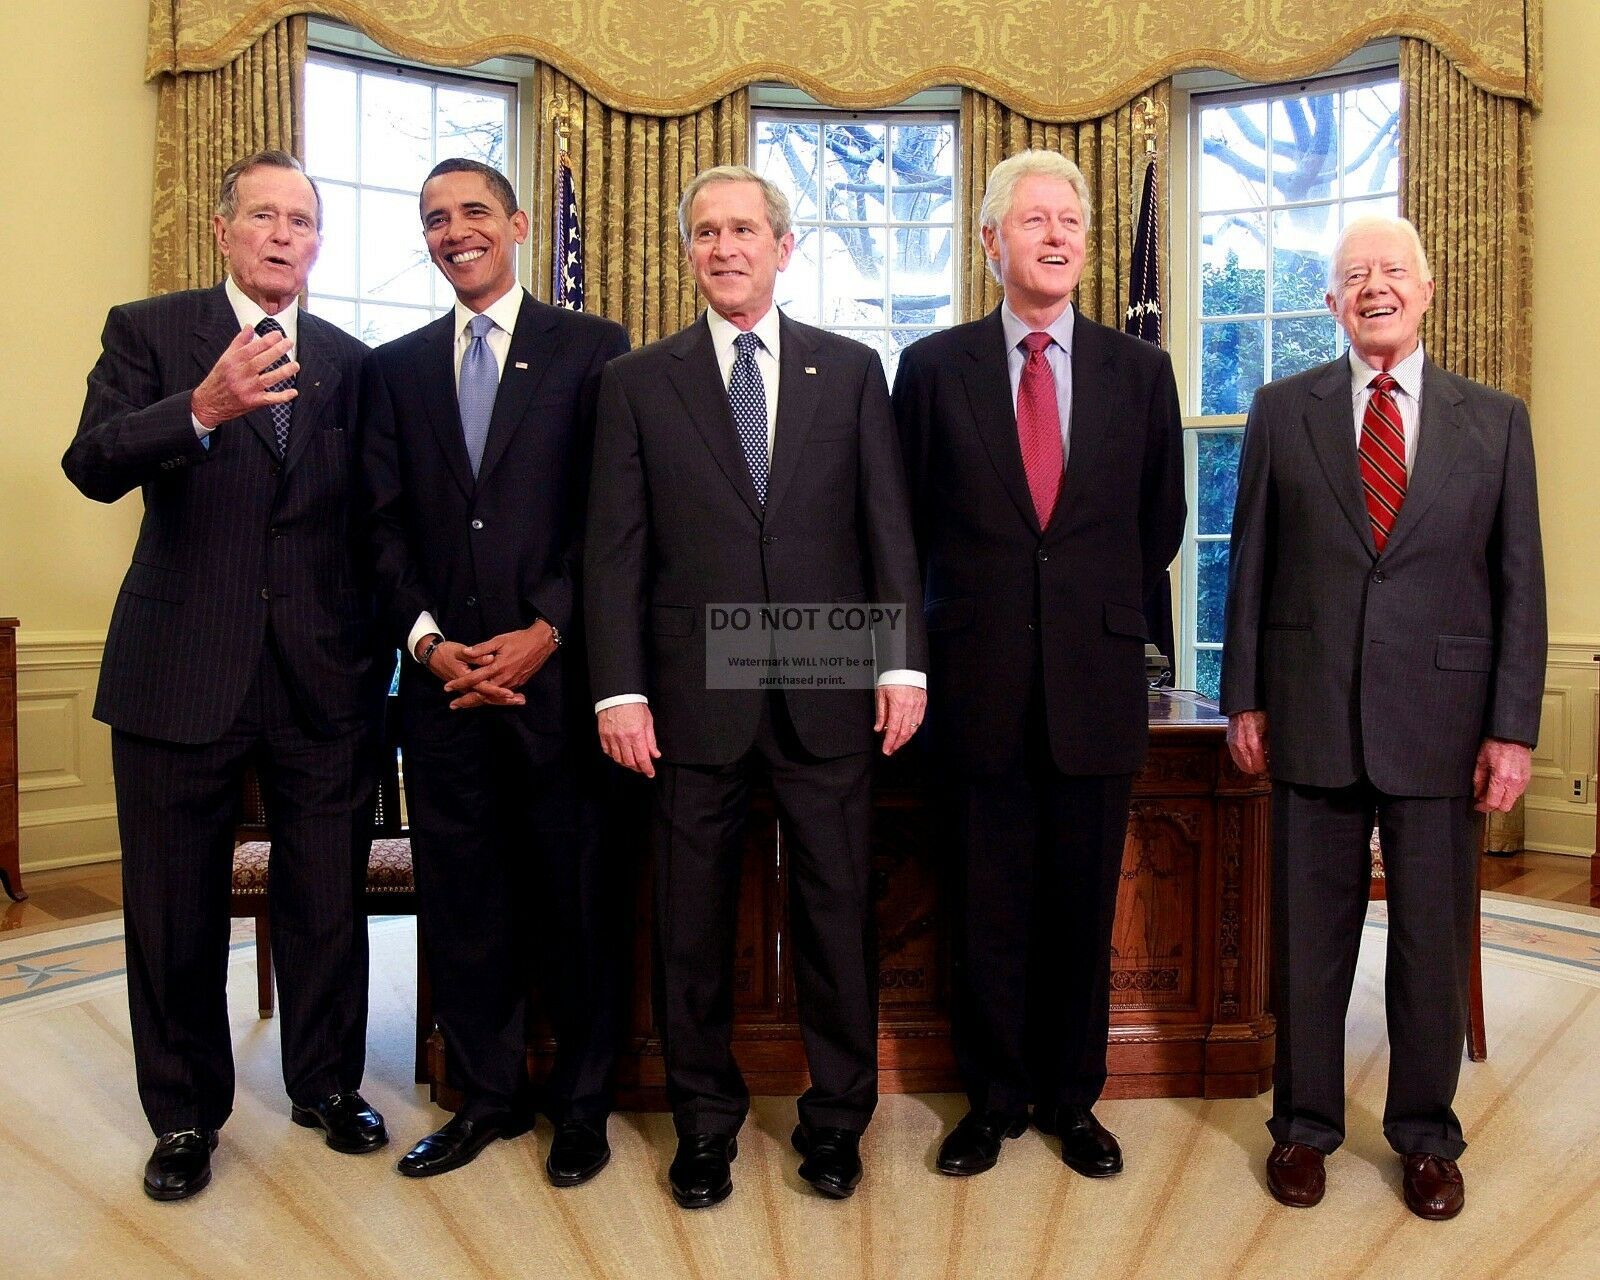 George W. Bush With Barack Obama And Former Presidents - 8x10 Photo (zy-634)